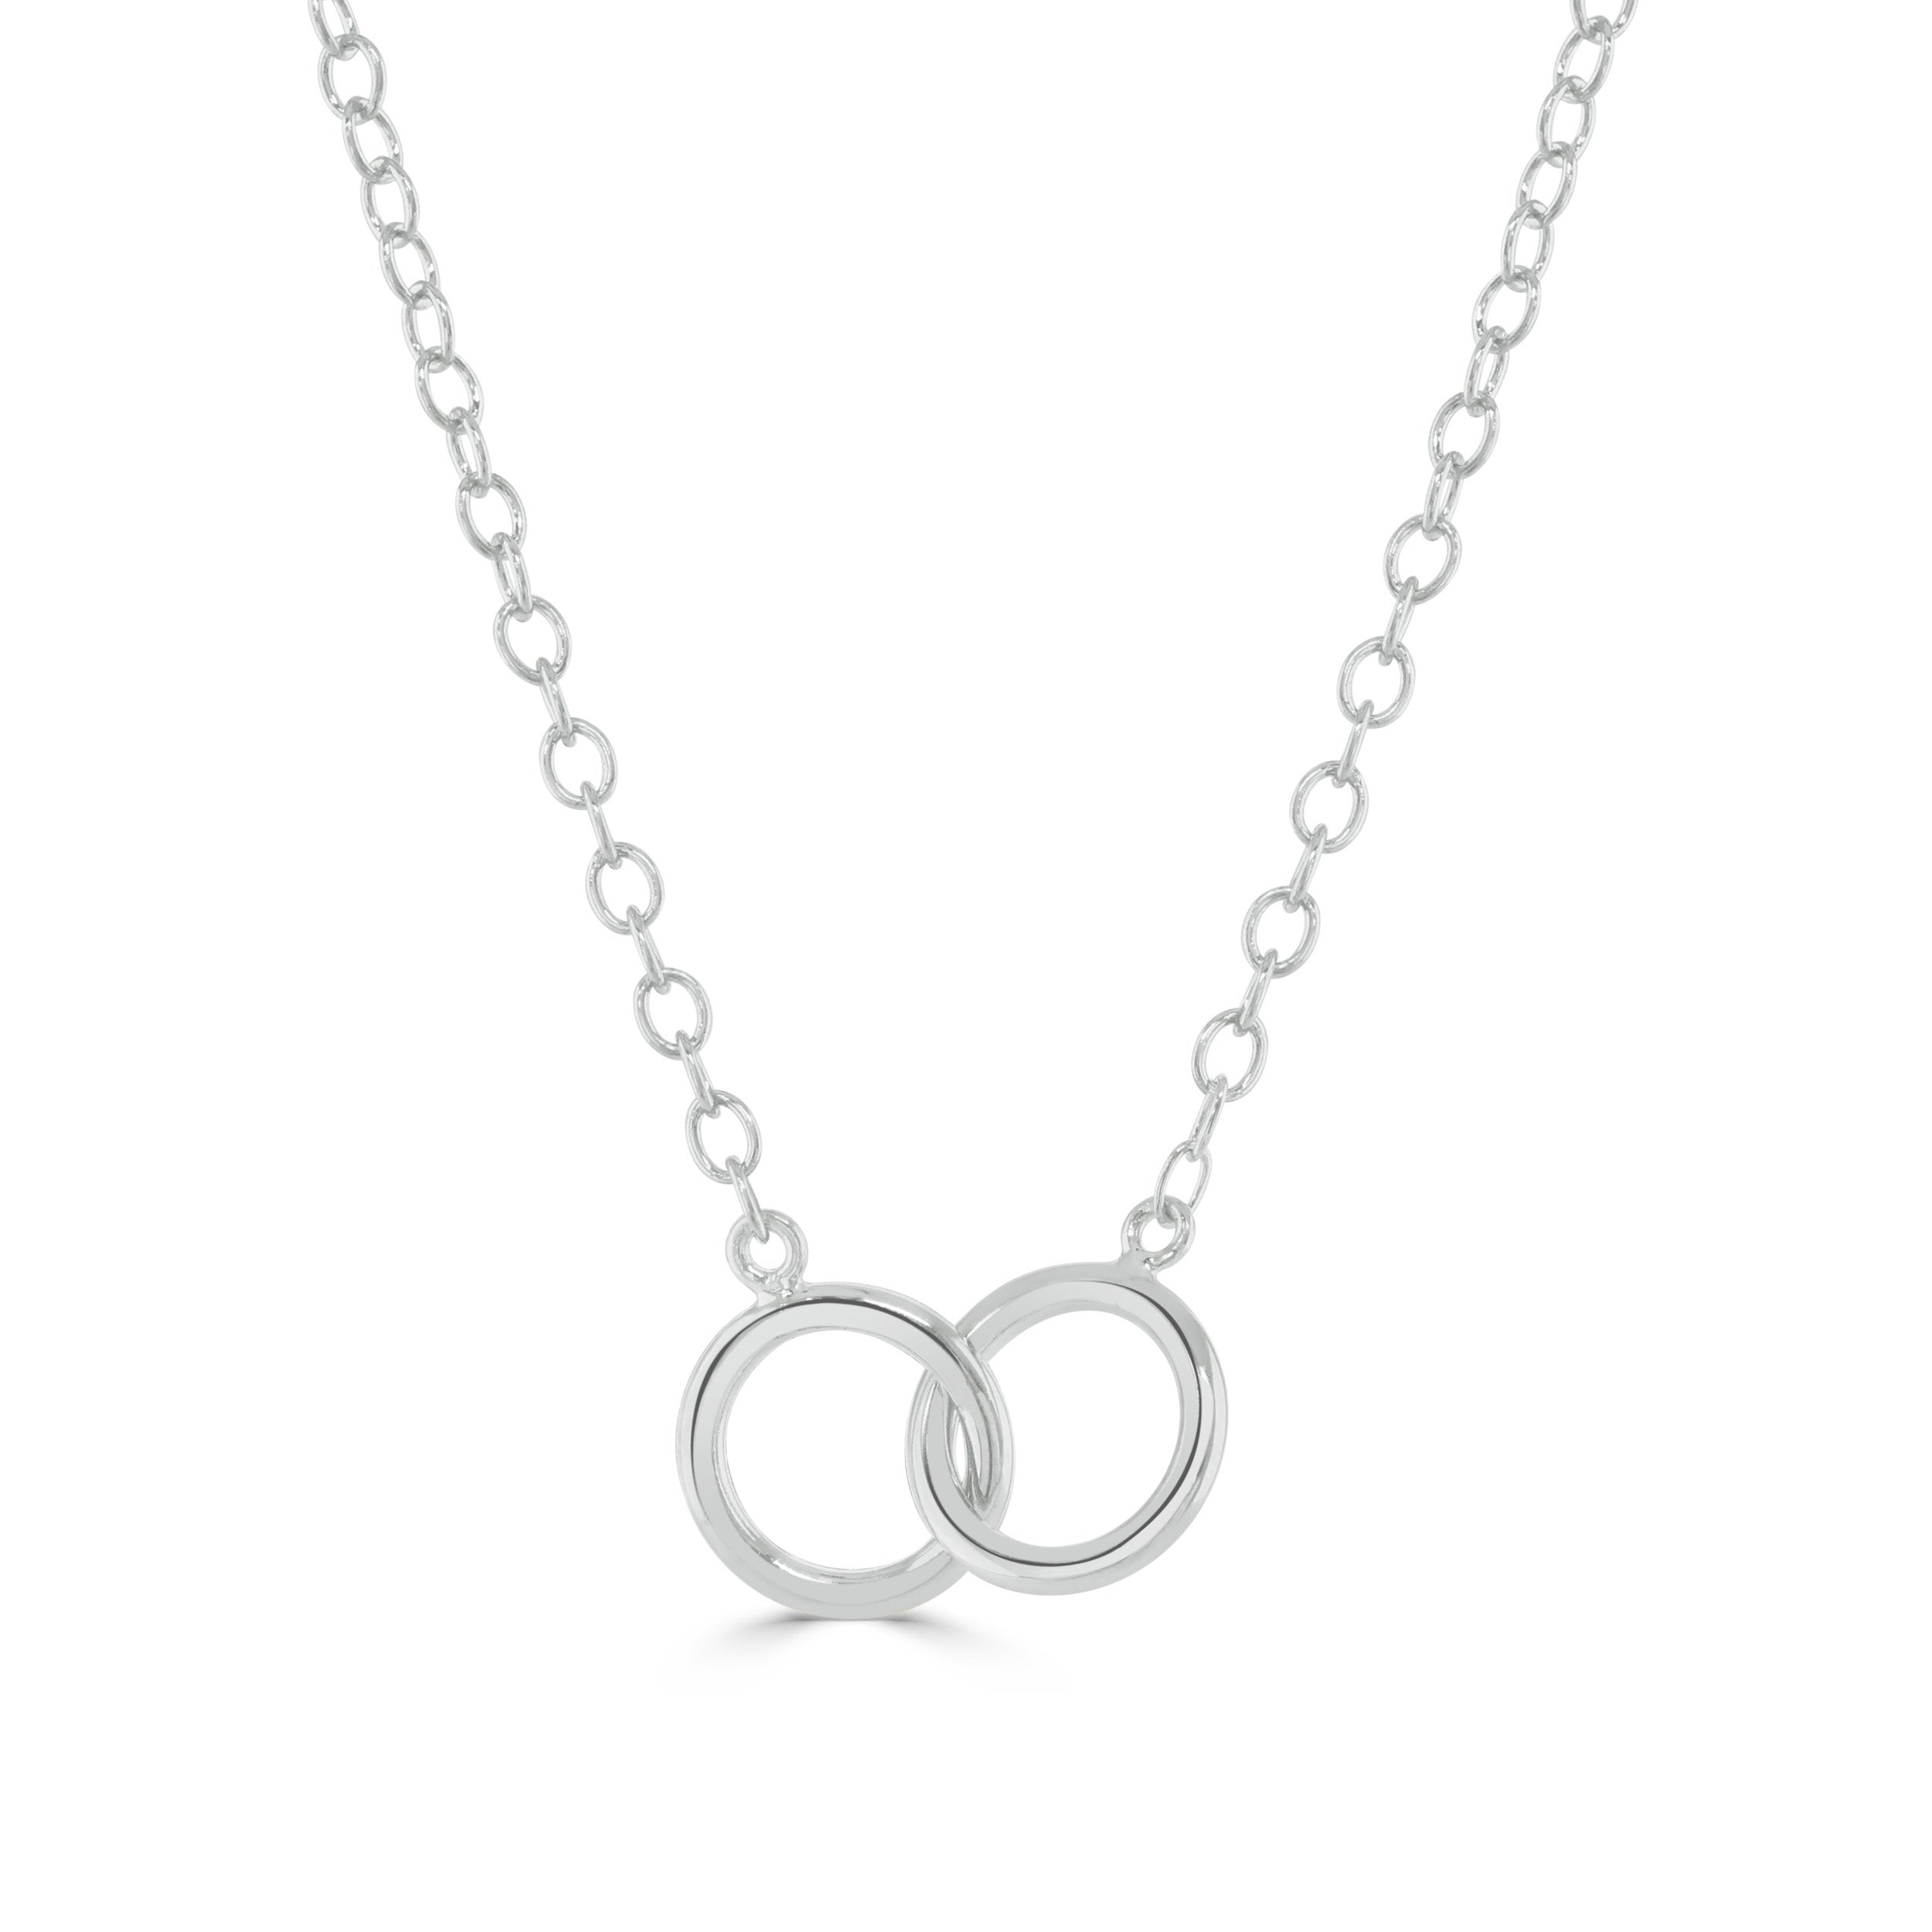 Silver interlocking link necklace